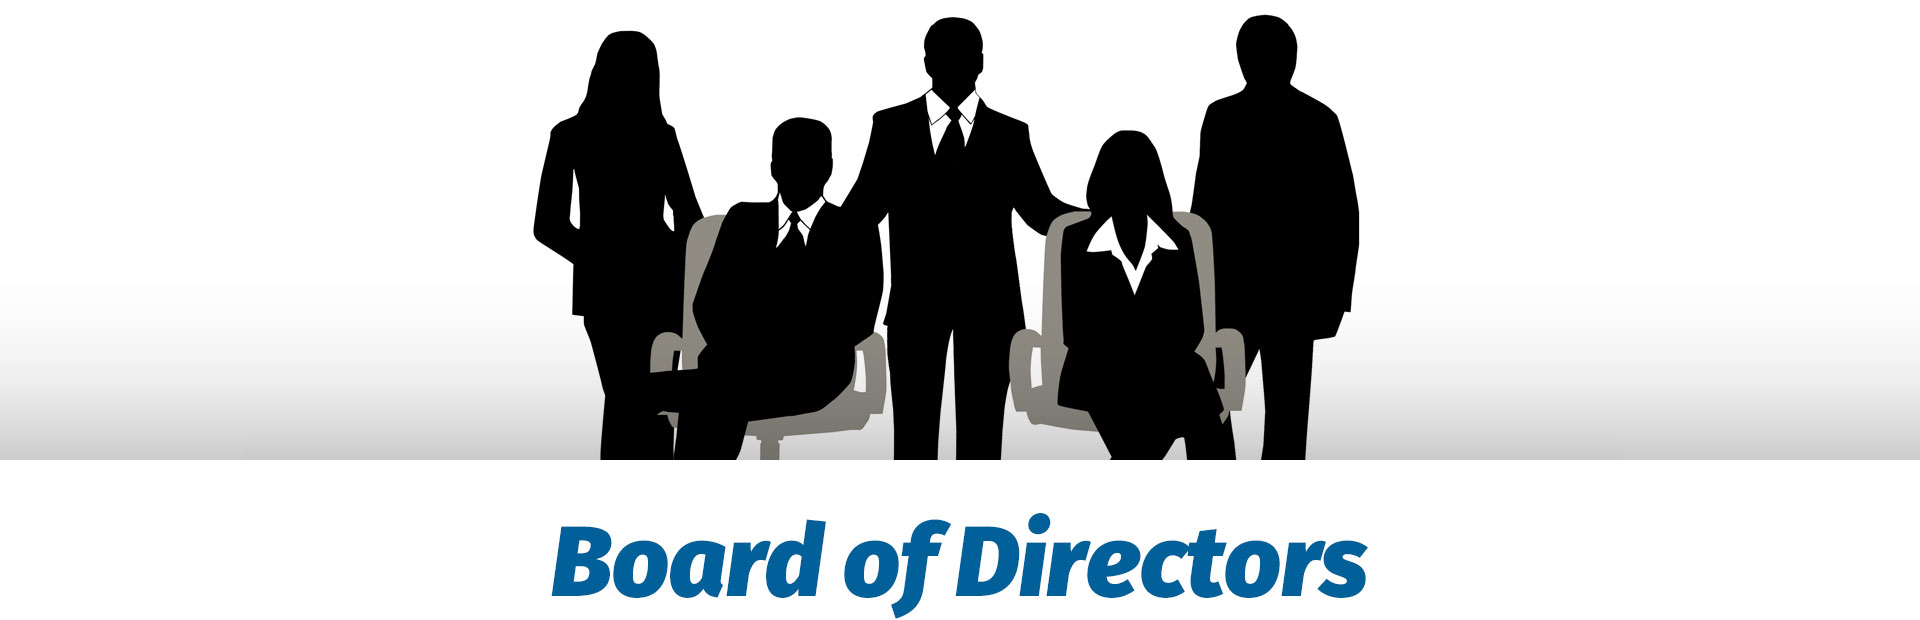 kleinlife directors, active adult community, senior community directors